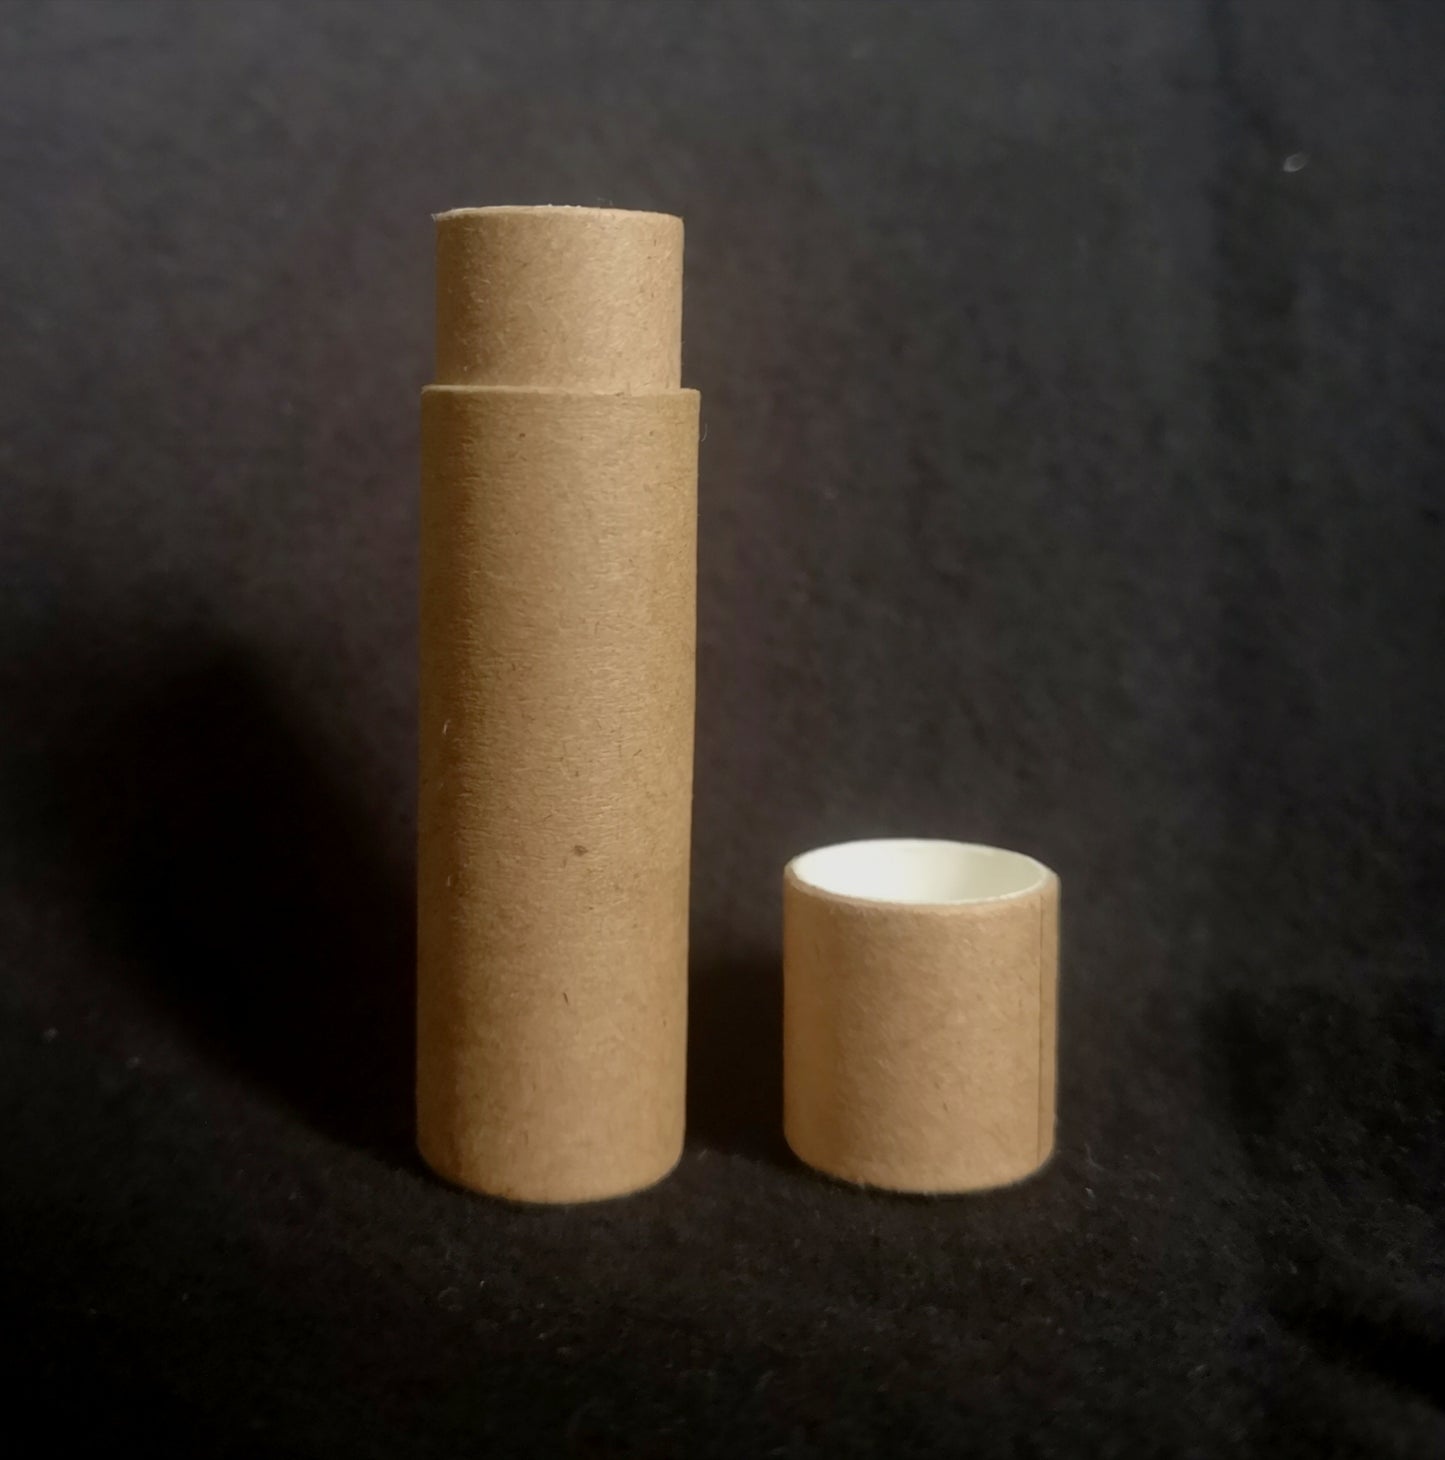 Lippenbalsamhülsen 10 ml - leer für DIY-Projekte